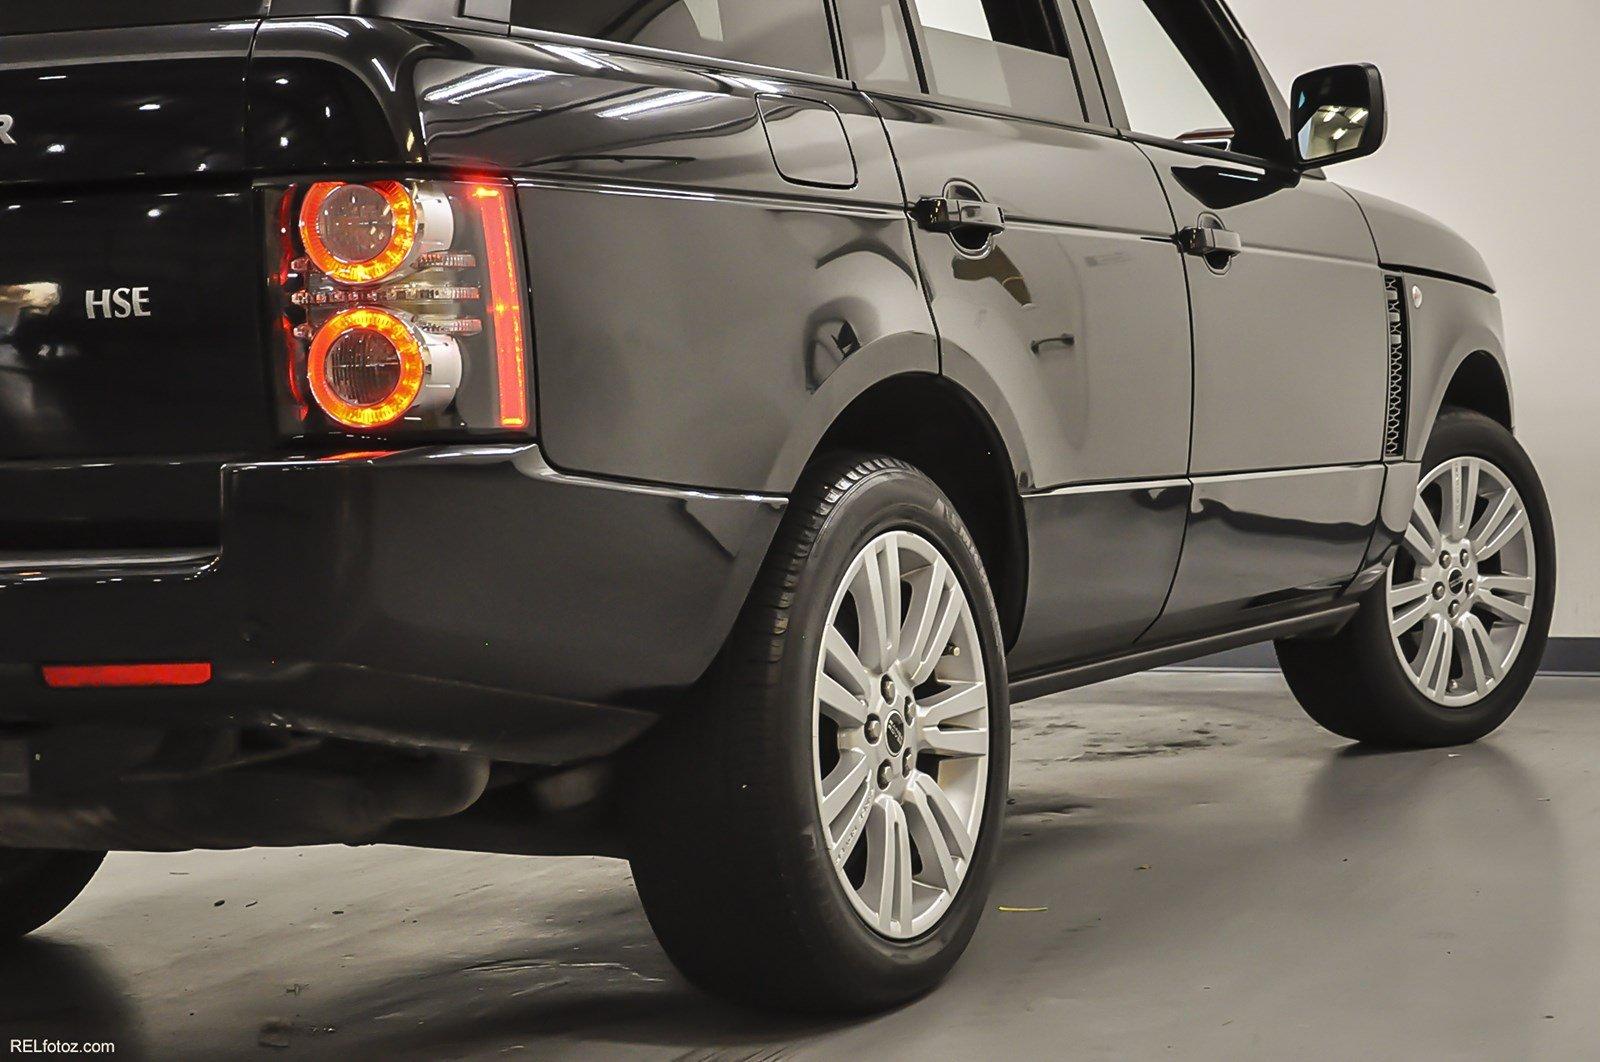 Used 2012 Land Rover Range Rover HSE for sale Sold at Gravity Autos Marietta in Marietta GA 30060 7